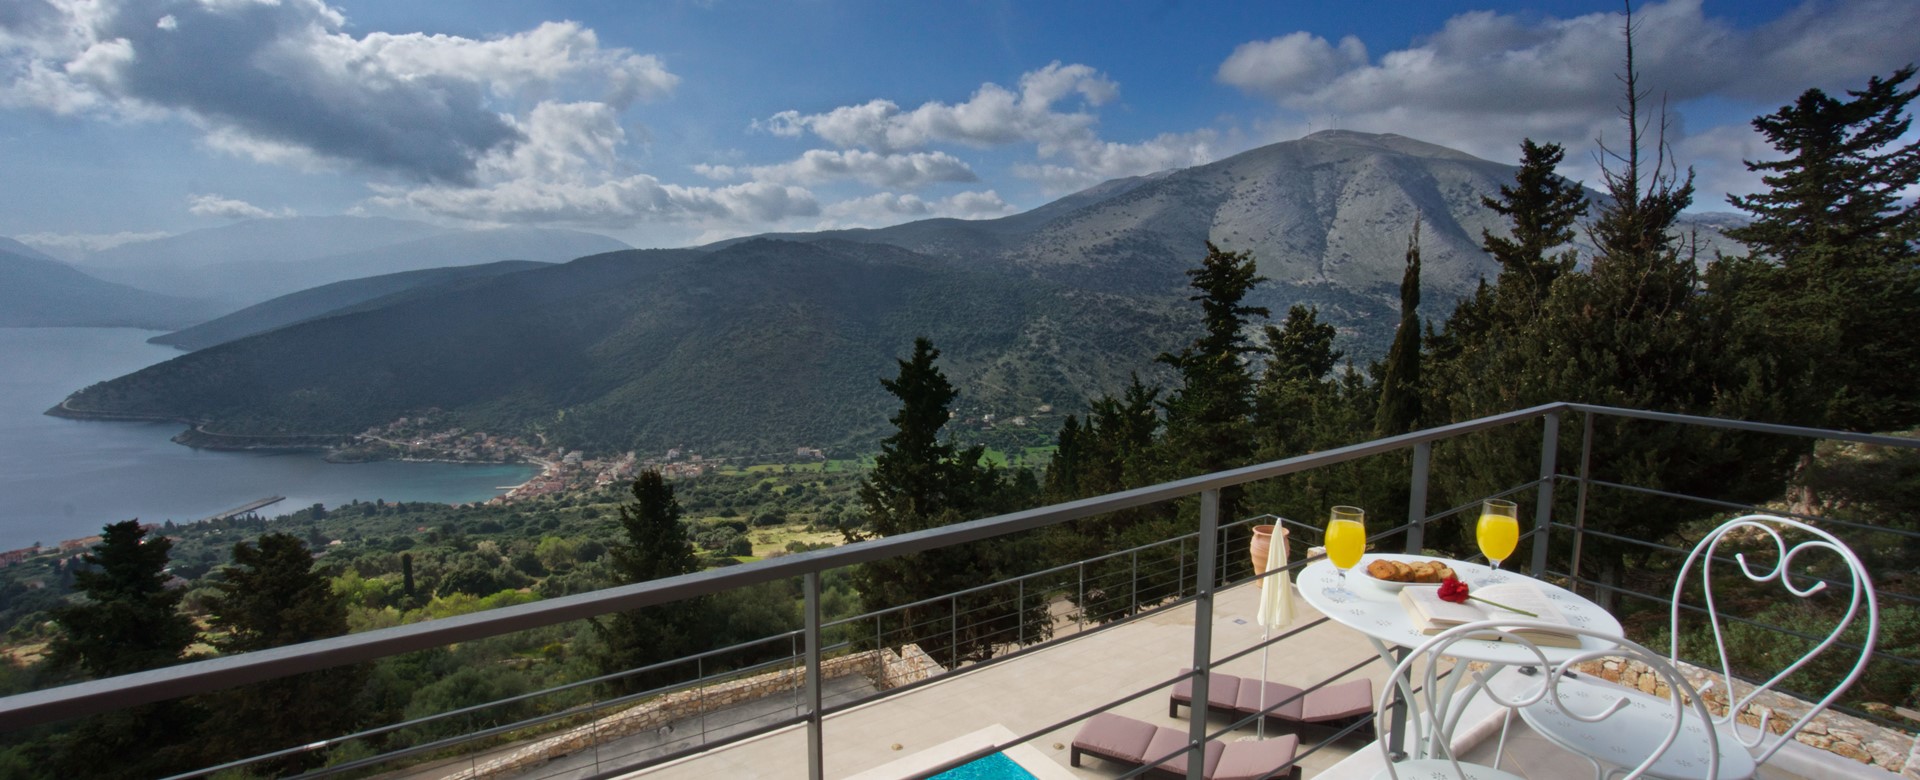 Enjoy the mountain and coastline views from the private balcony at Villa Aurora, Agia Efimia, Kefalonia, Greek Islands